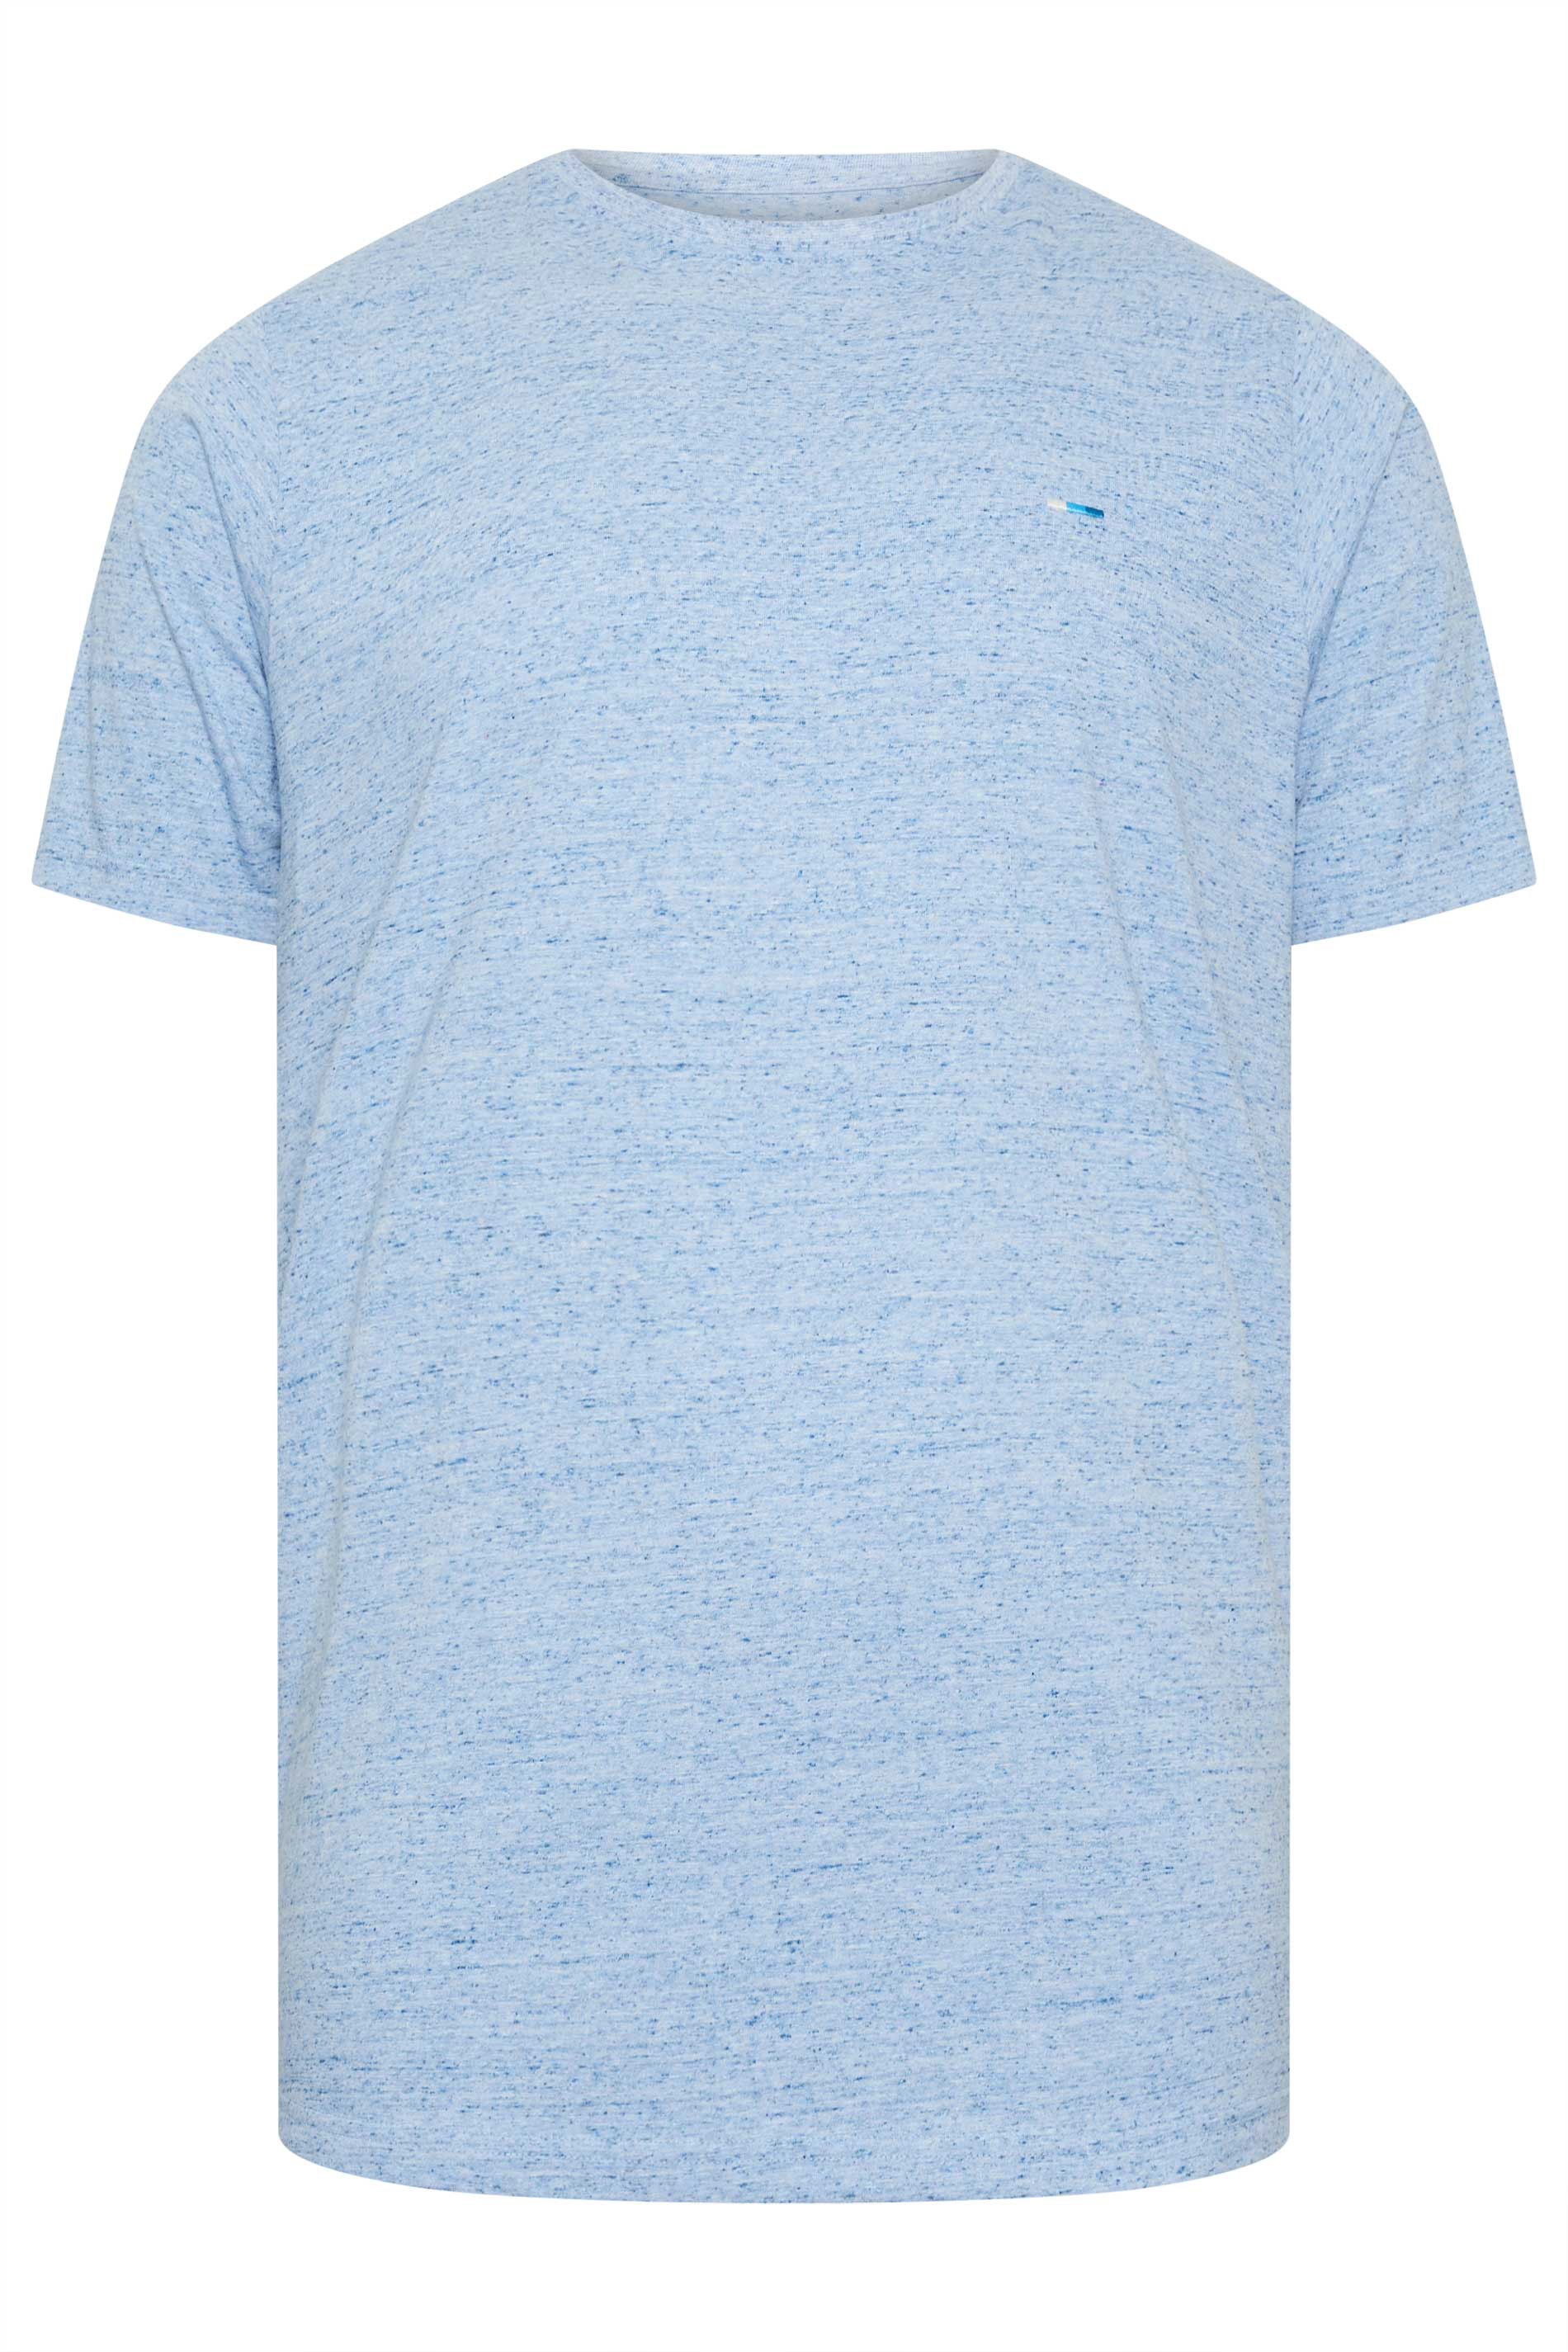 BadRhino Big & Tall Blue Marl T-Shirt | BadRhino 2